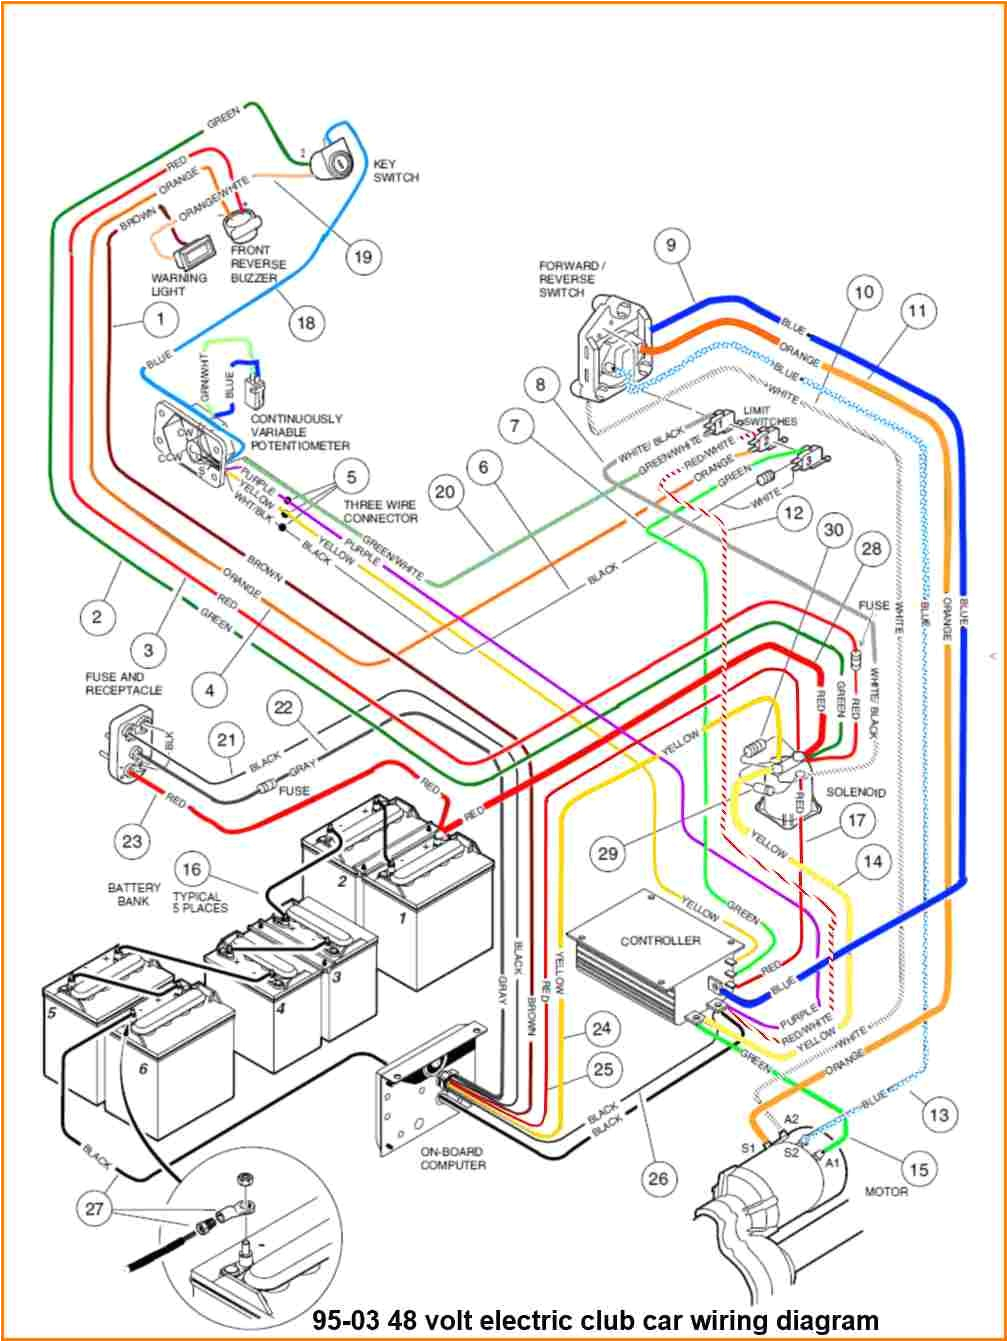 36 volt wiring color diagram wiring diagram blog 36 volt western wiring diagram